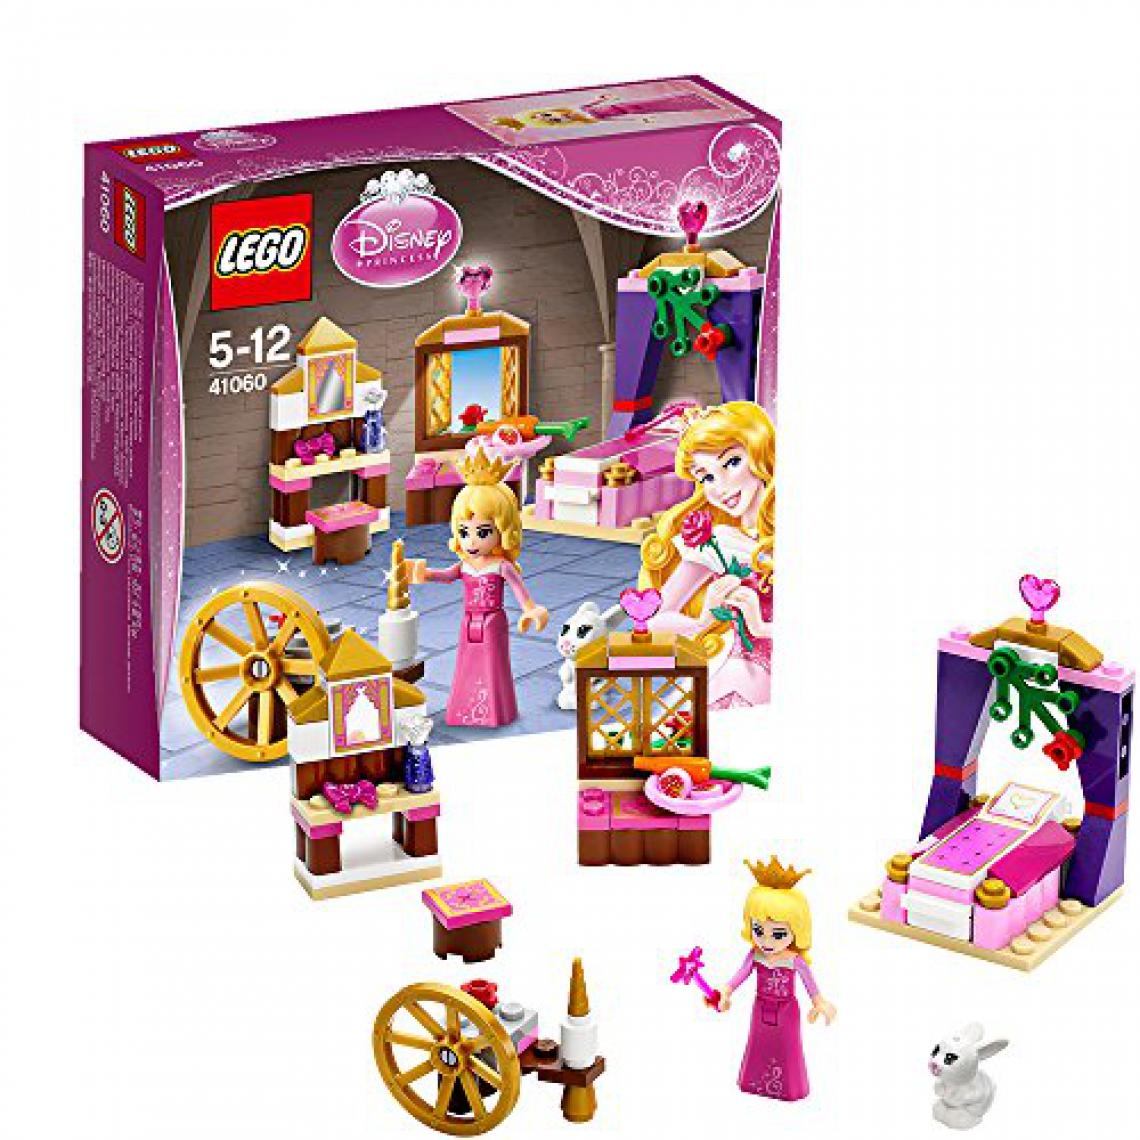 Lego - LEGO Disney Princess: La chambre royale des beautés endormies (41060) - Briques et blocs